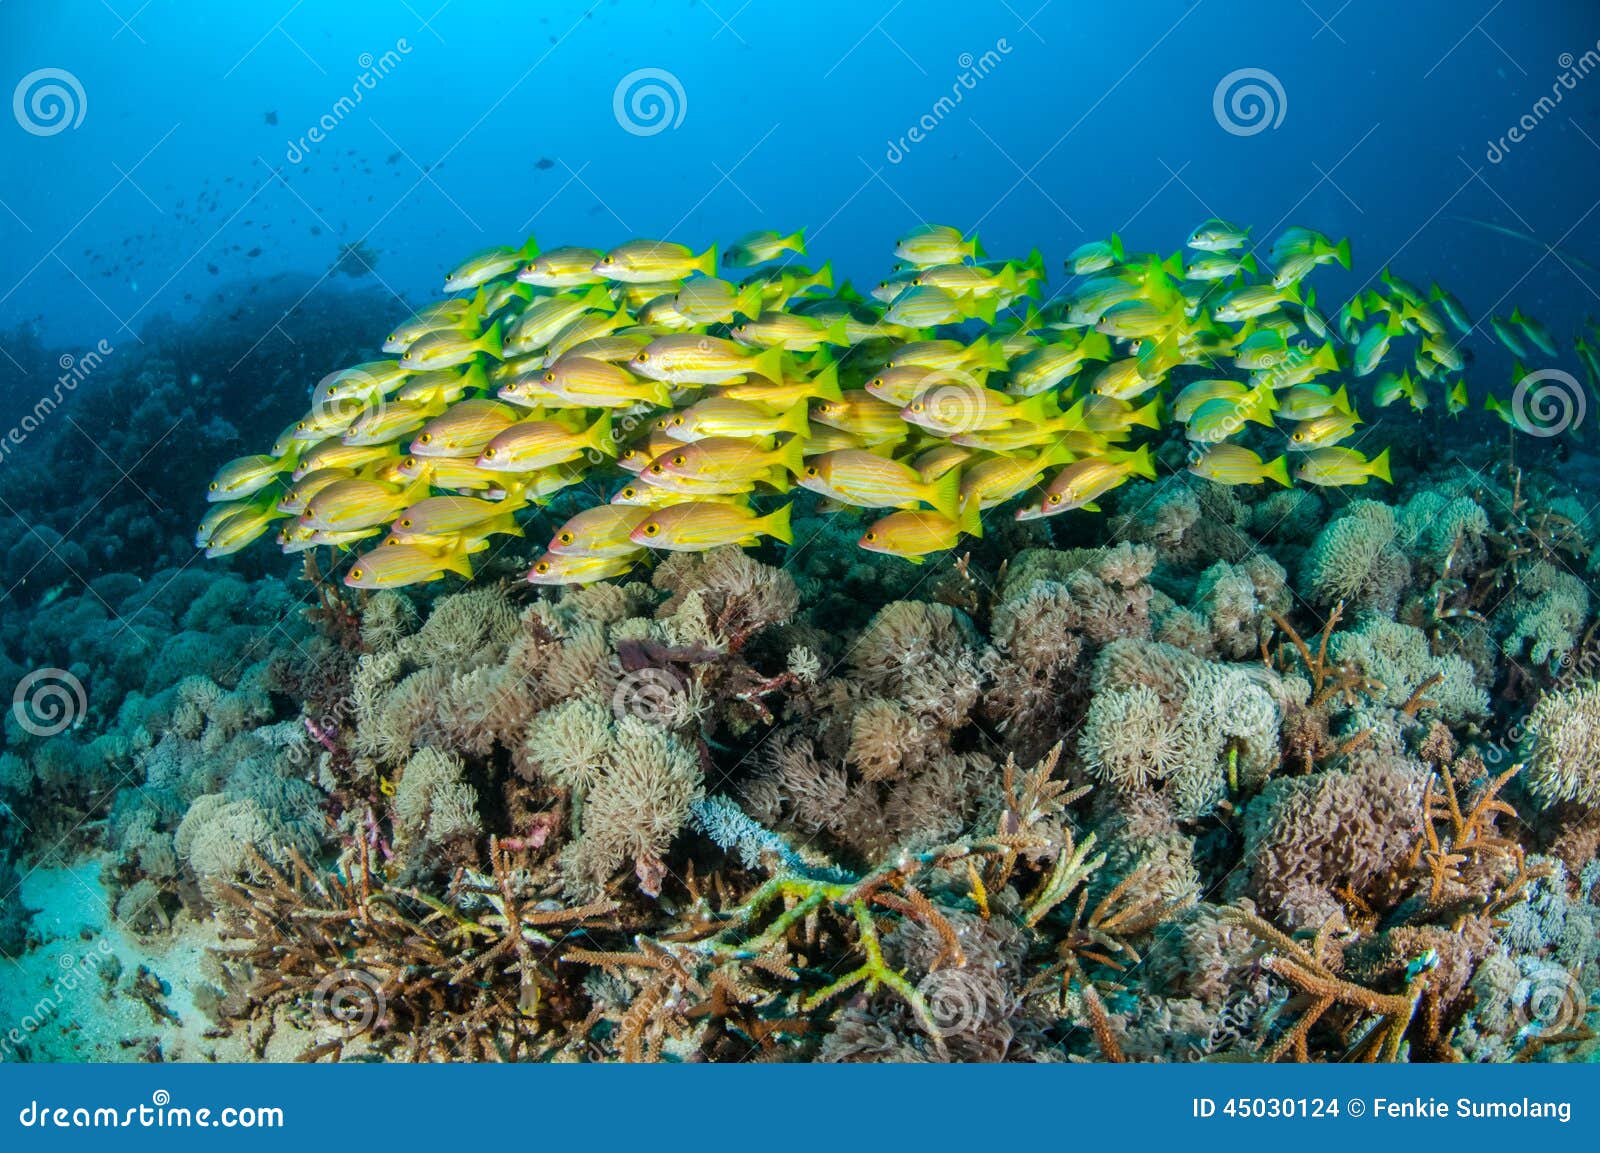 schooling bluestripe snapper lutjanus kasmira in gili,lombok,nusa tenggara barat,indonesia underwater photo